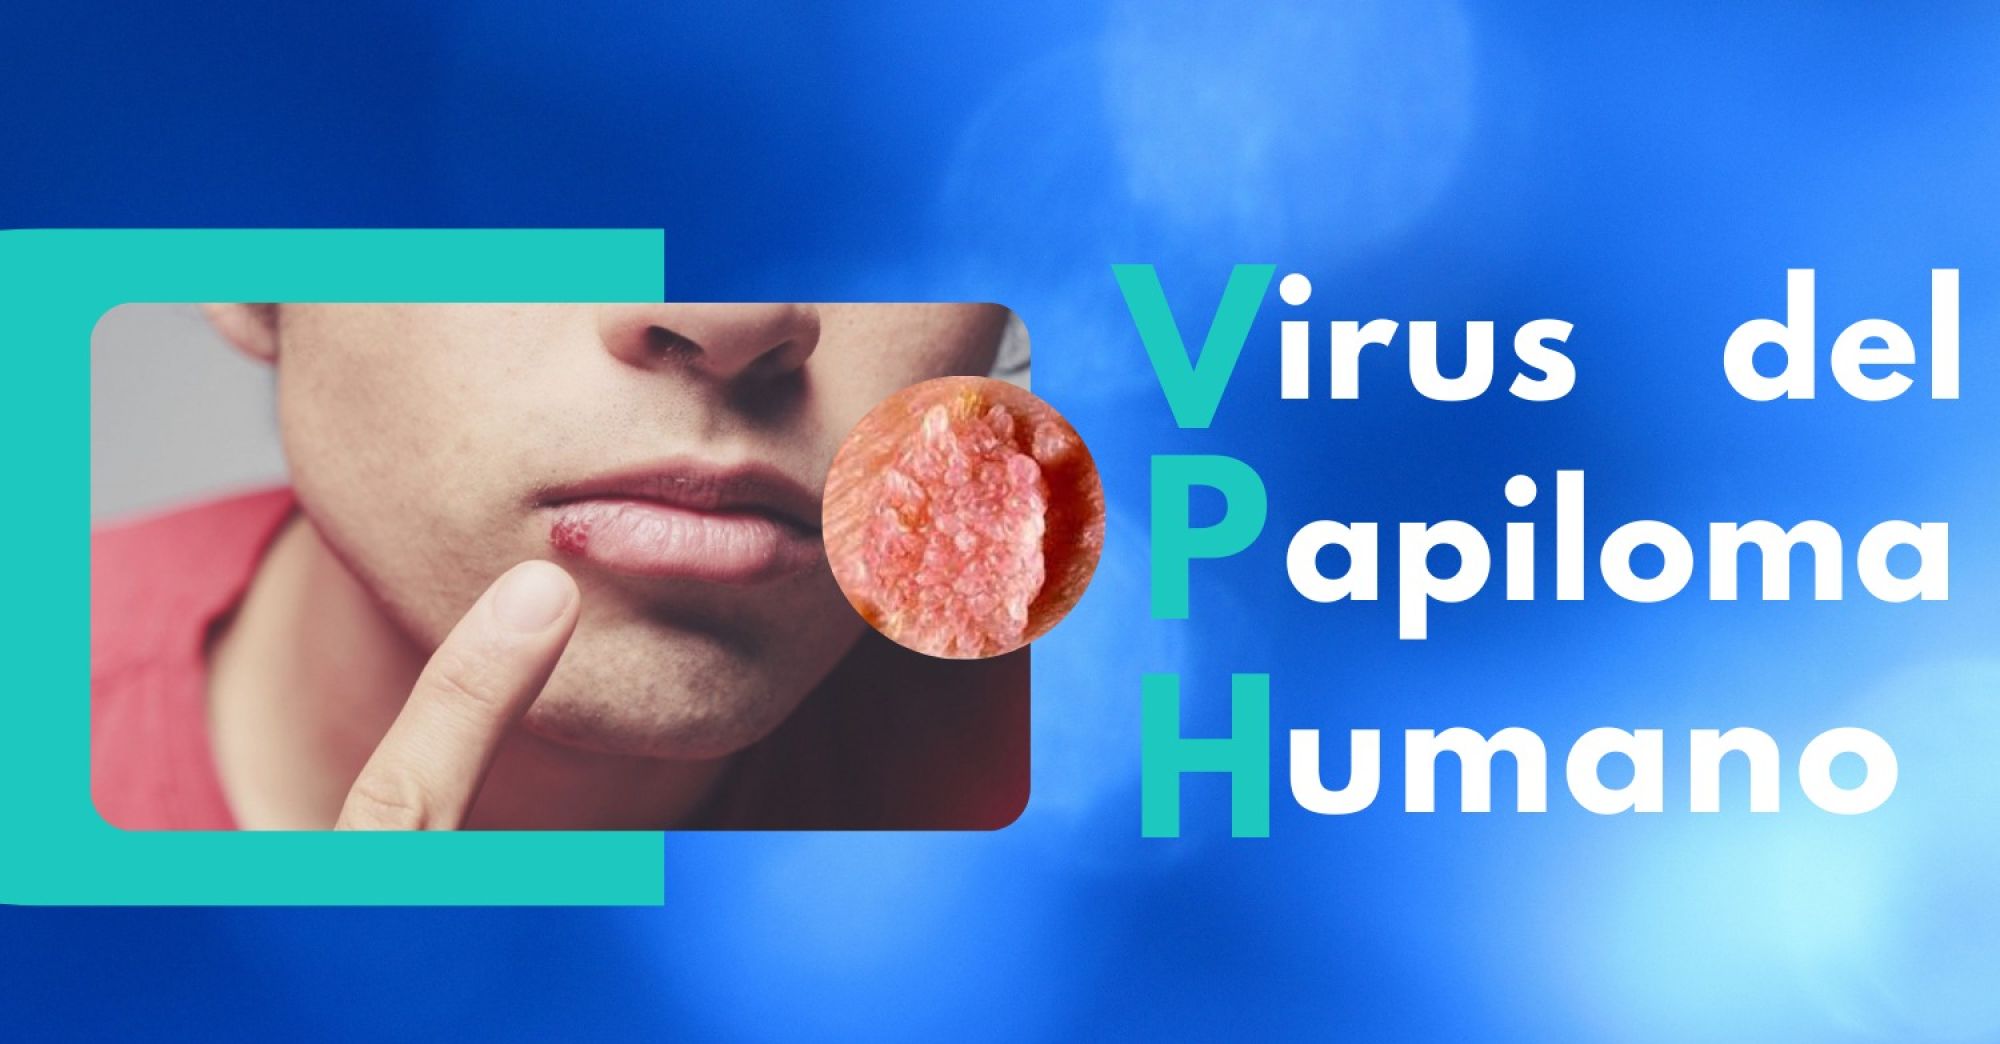 Virus del Papiloma Humano